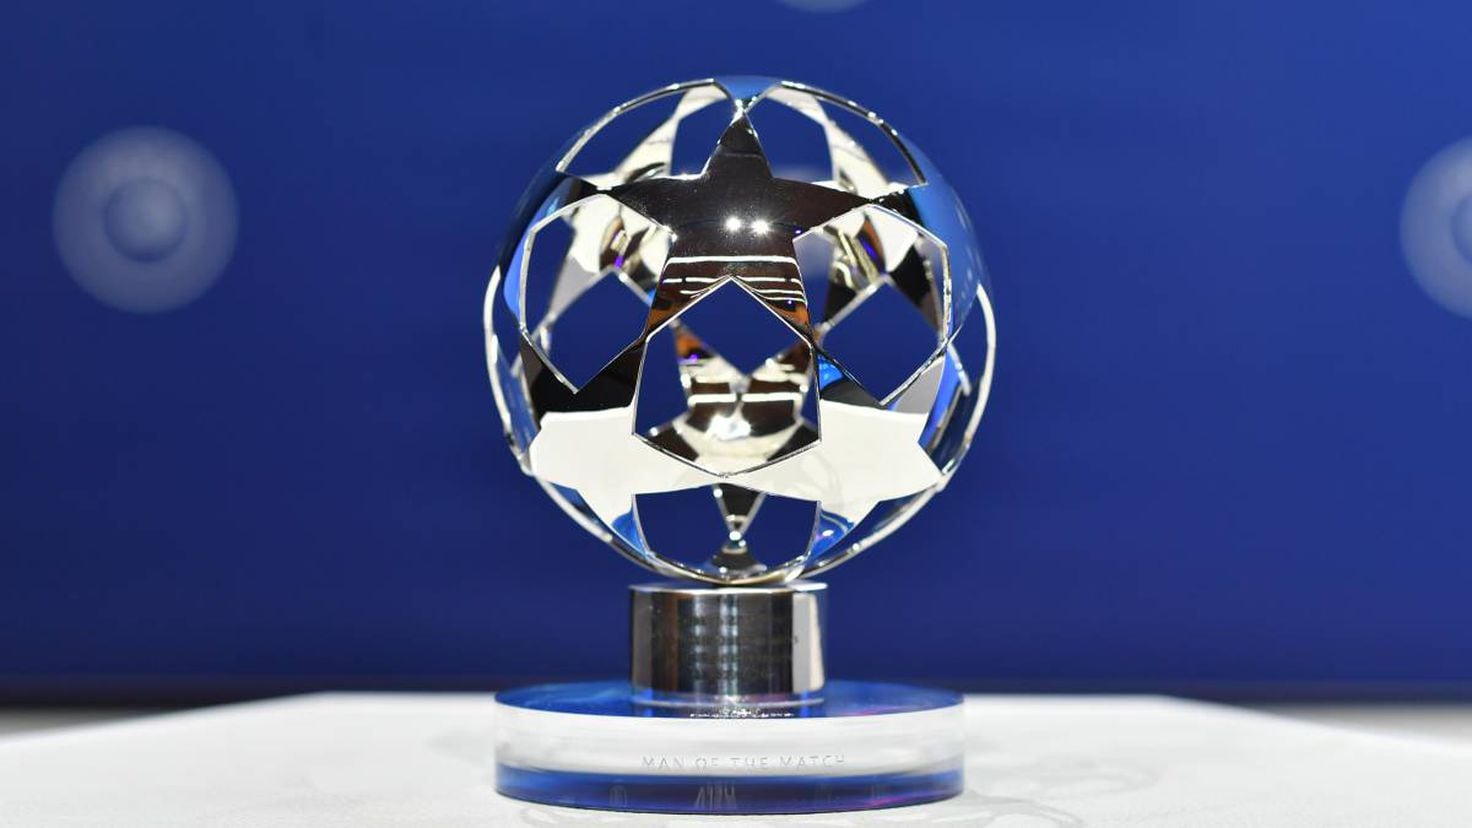 Nine-man commission to adjudge new UCL MVP award - AS USA